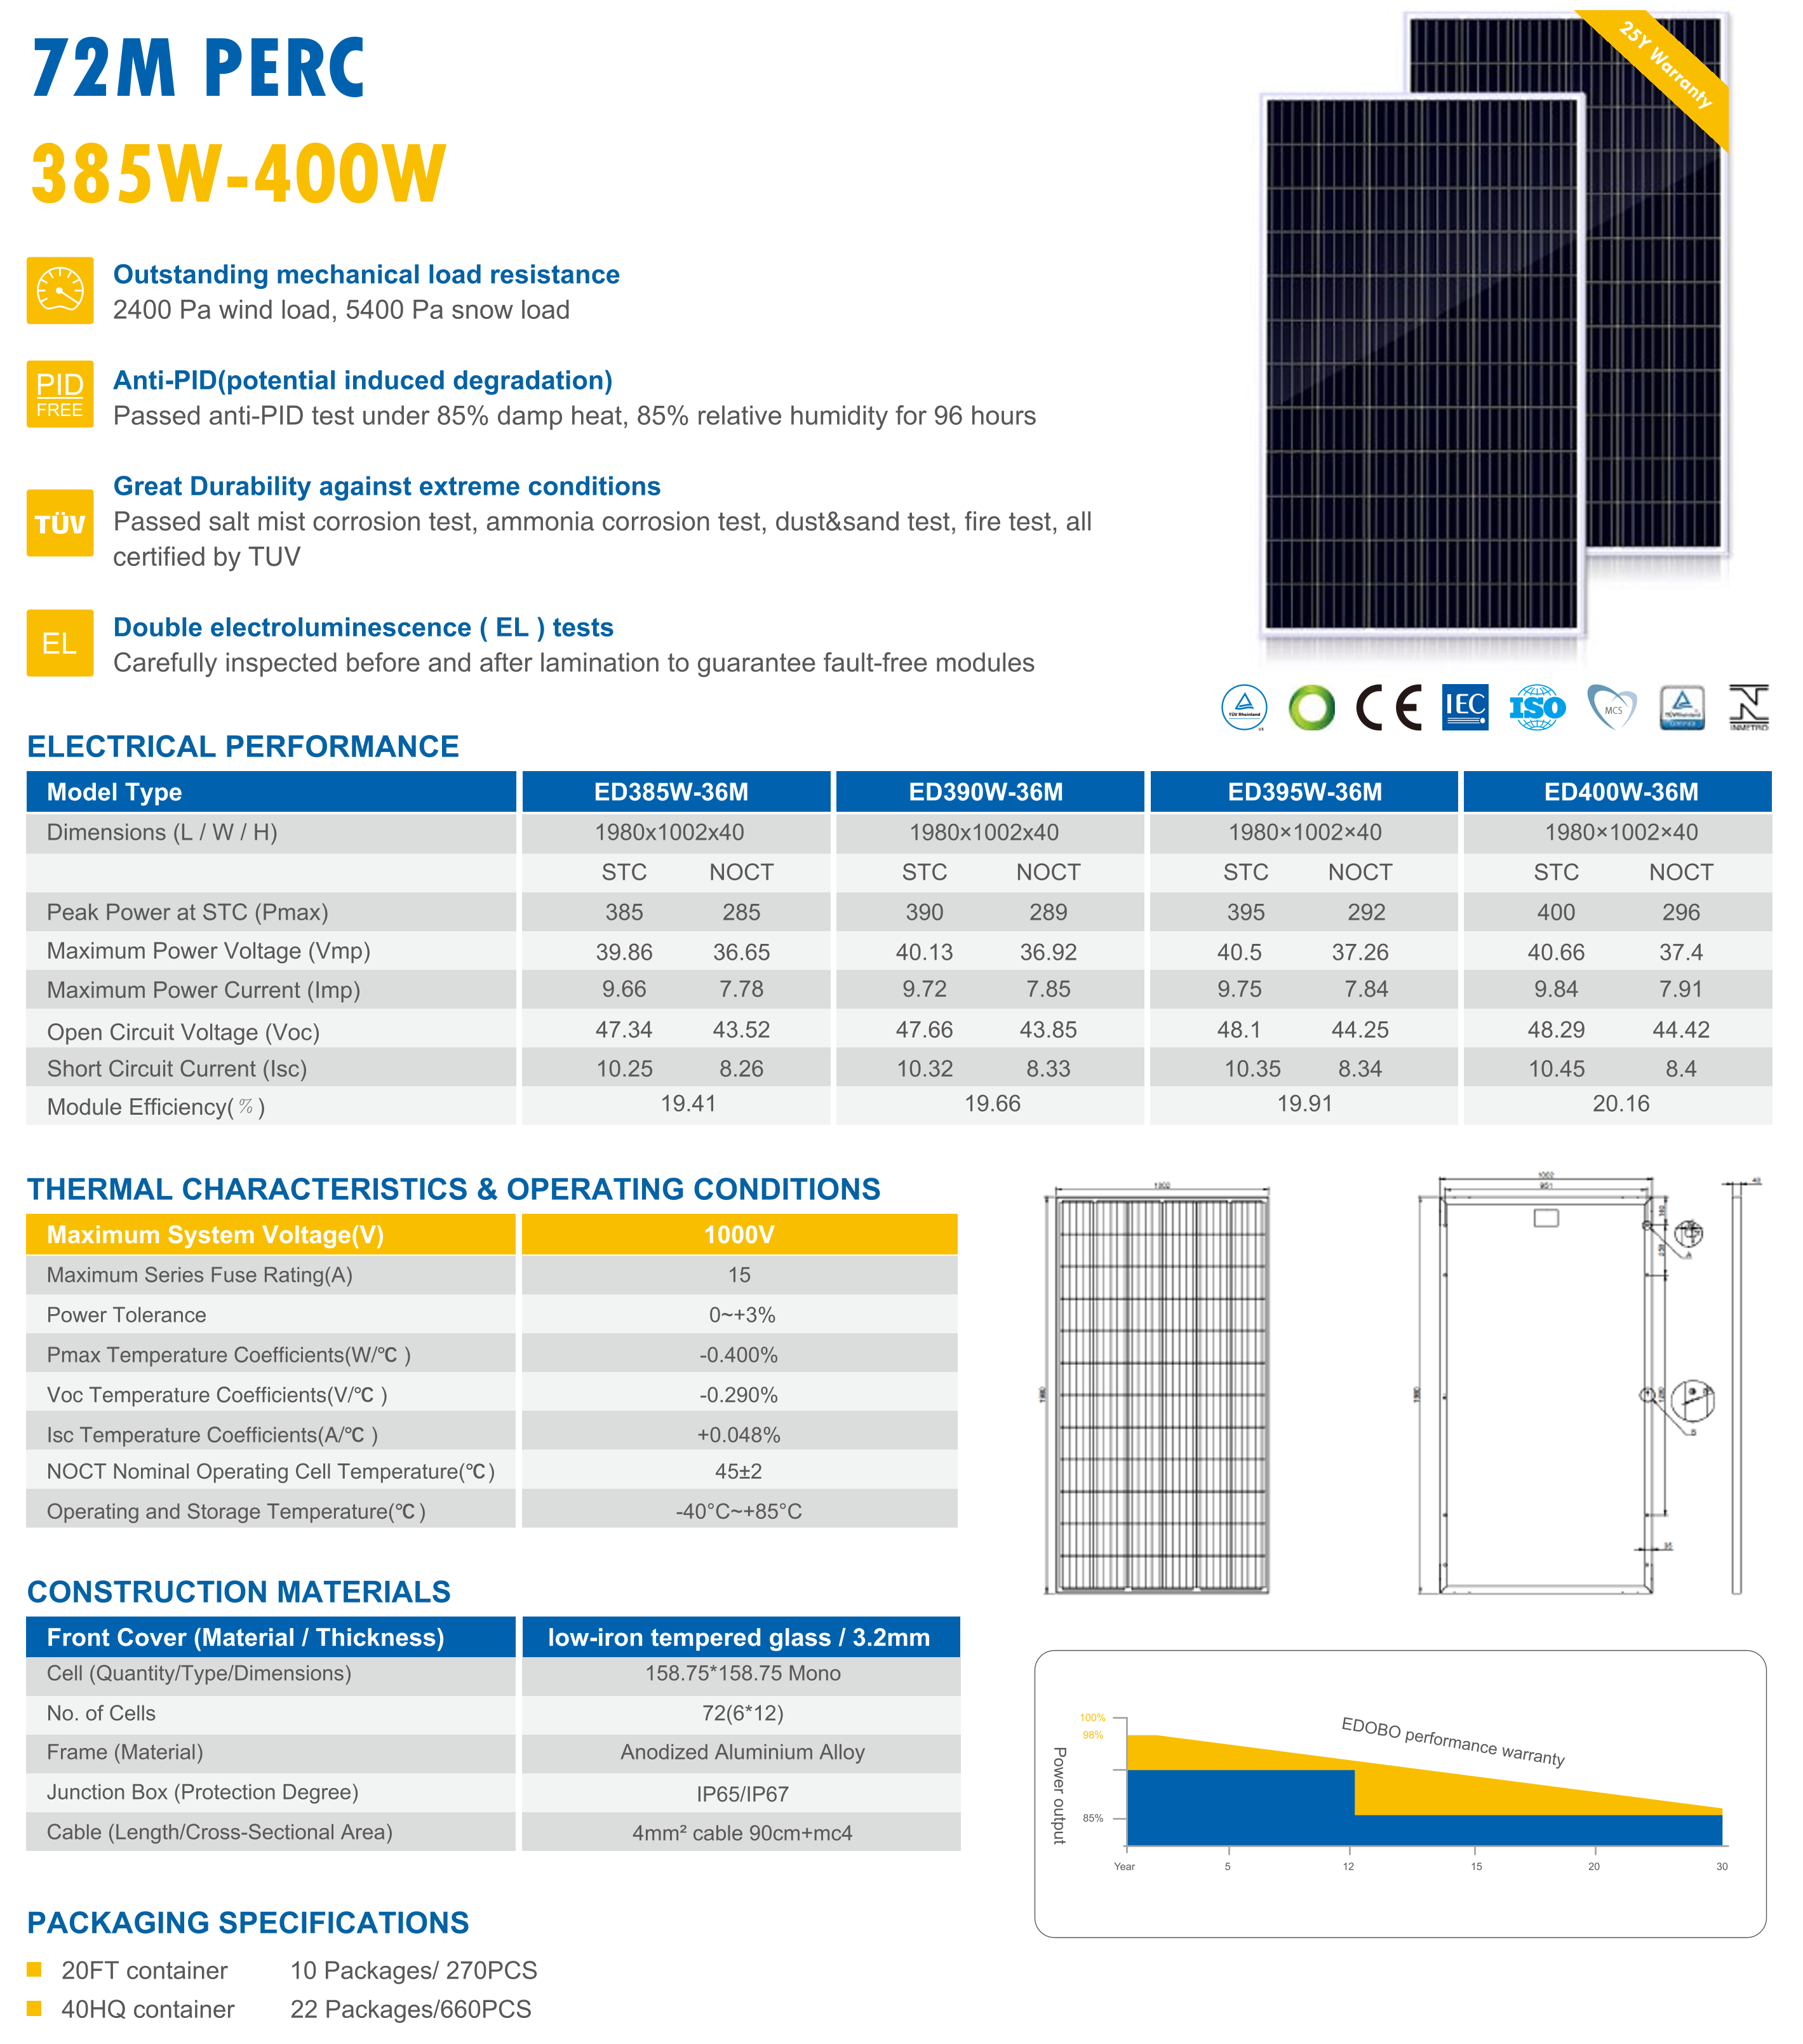 Edobo 390w 400w Solar Panels high efficiency N type solar panel Factory wholesale price